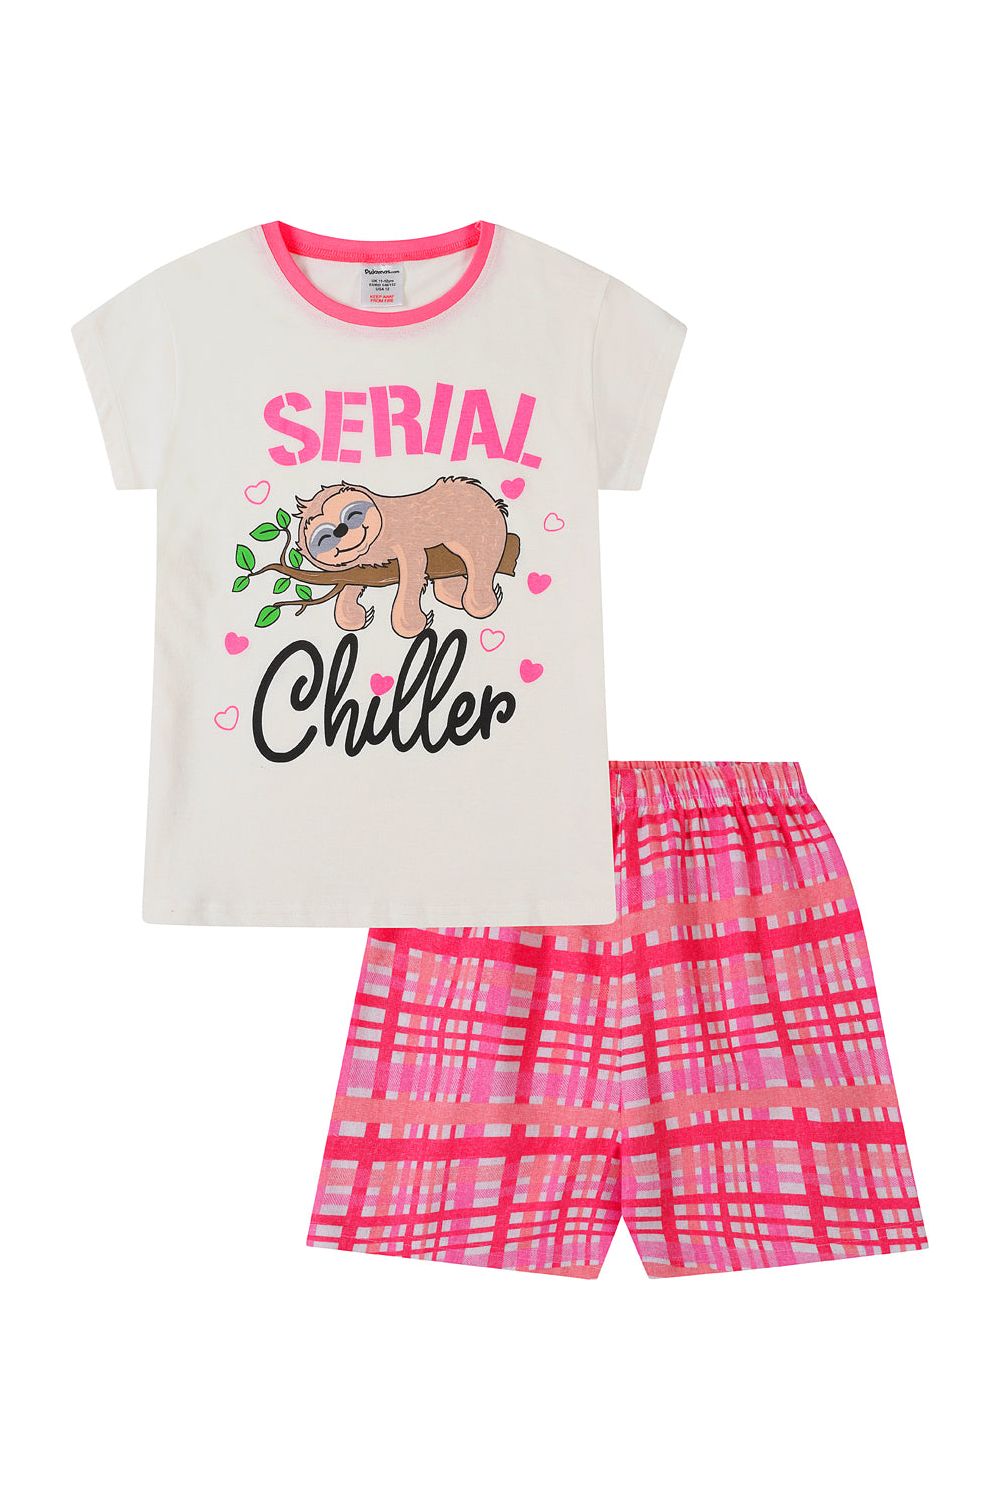 Girls Sloth Serial Chiller Checked Leg Girls Short Cotton Pj - Pyjamas.com